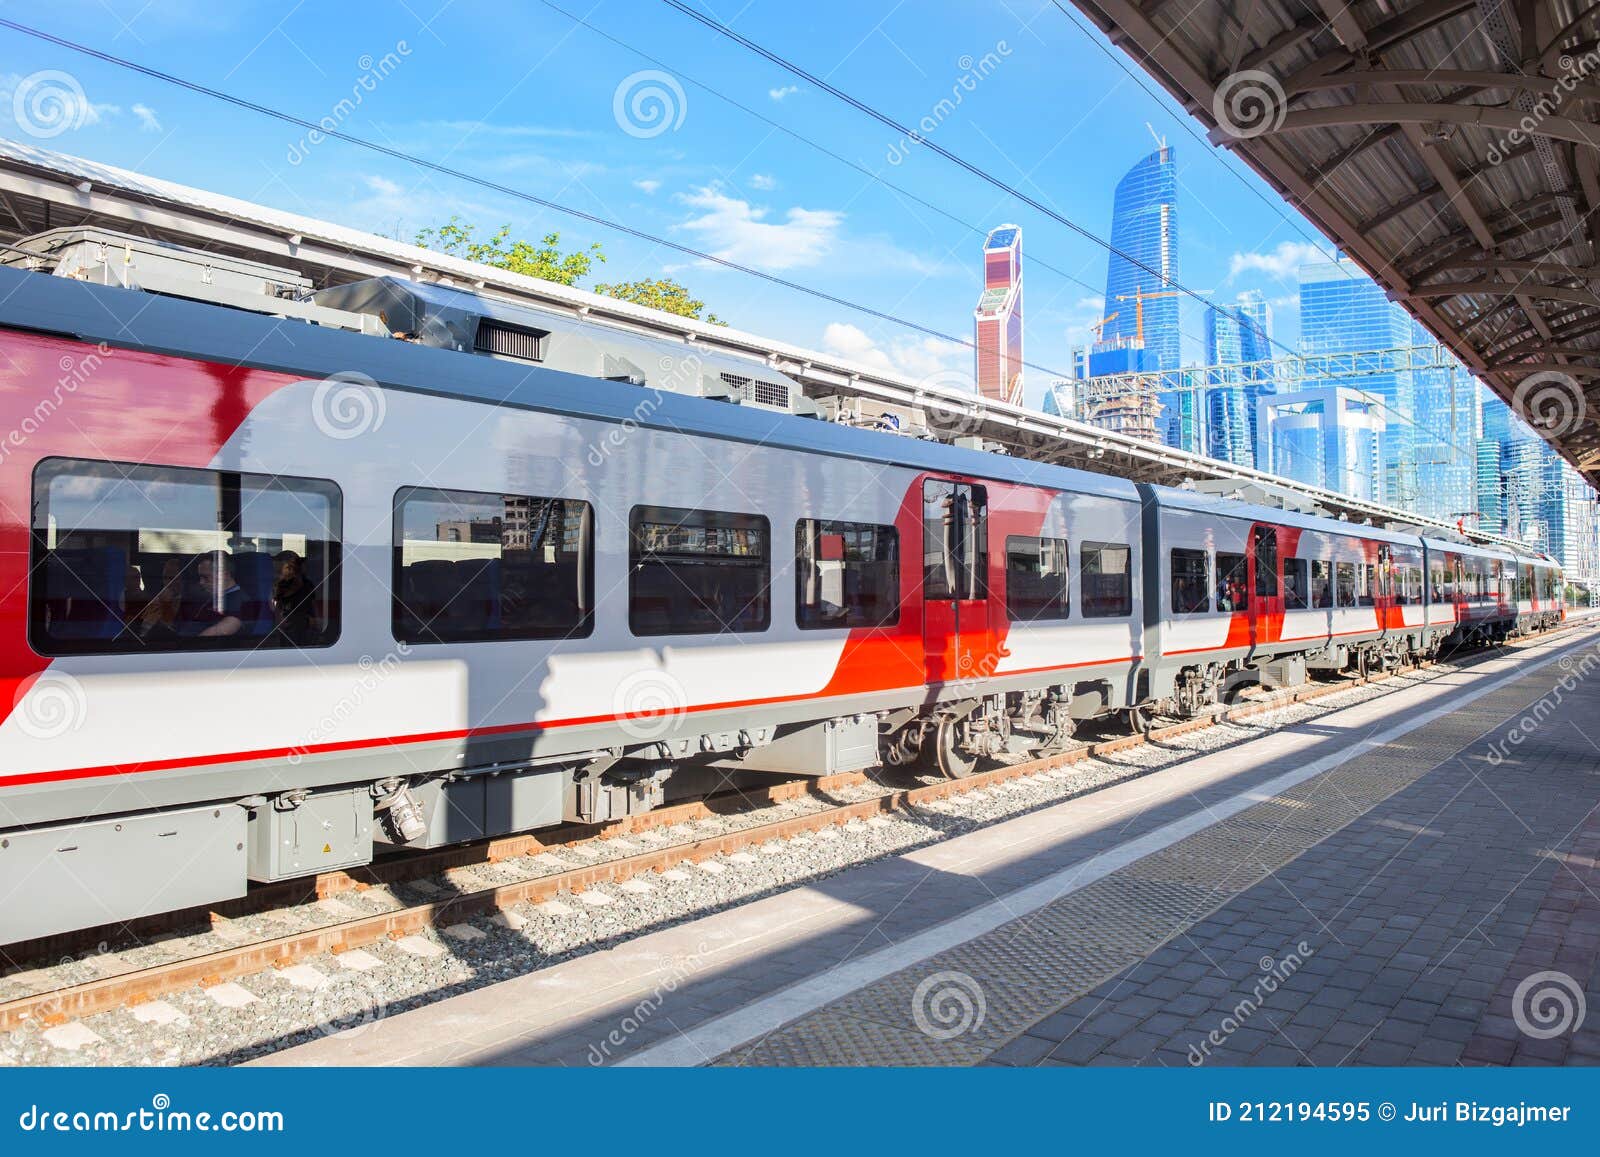 Electrical Unit Station Passenger Ring Train Stock Photo 1998797594 |  Shutterstock